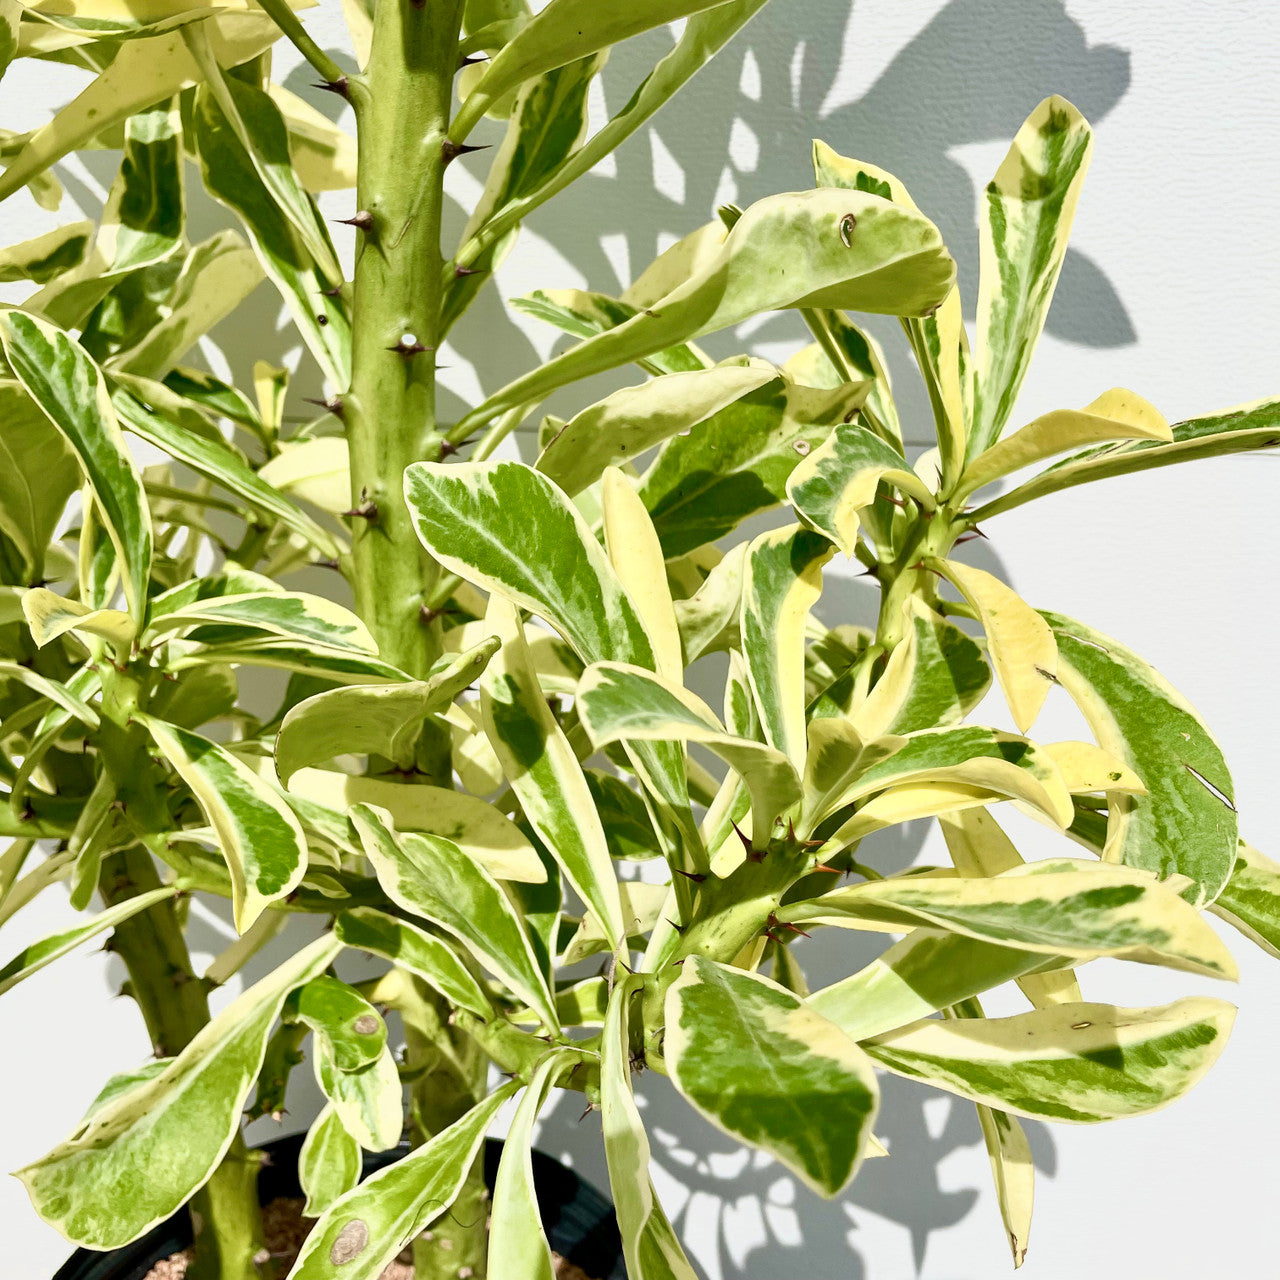 Euphorbia Neriifolia up close to show detail